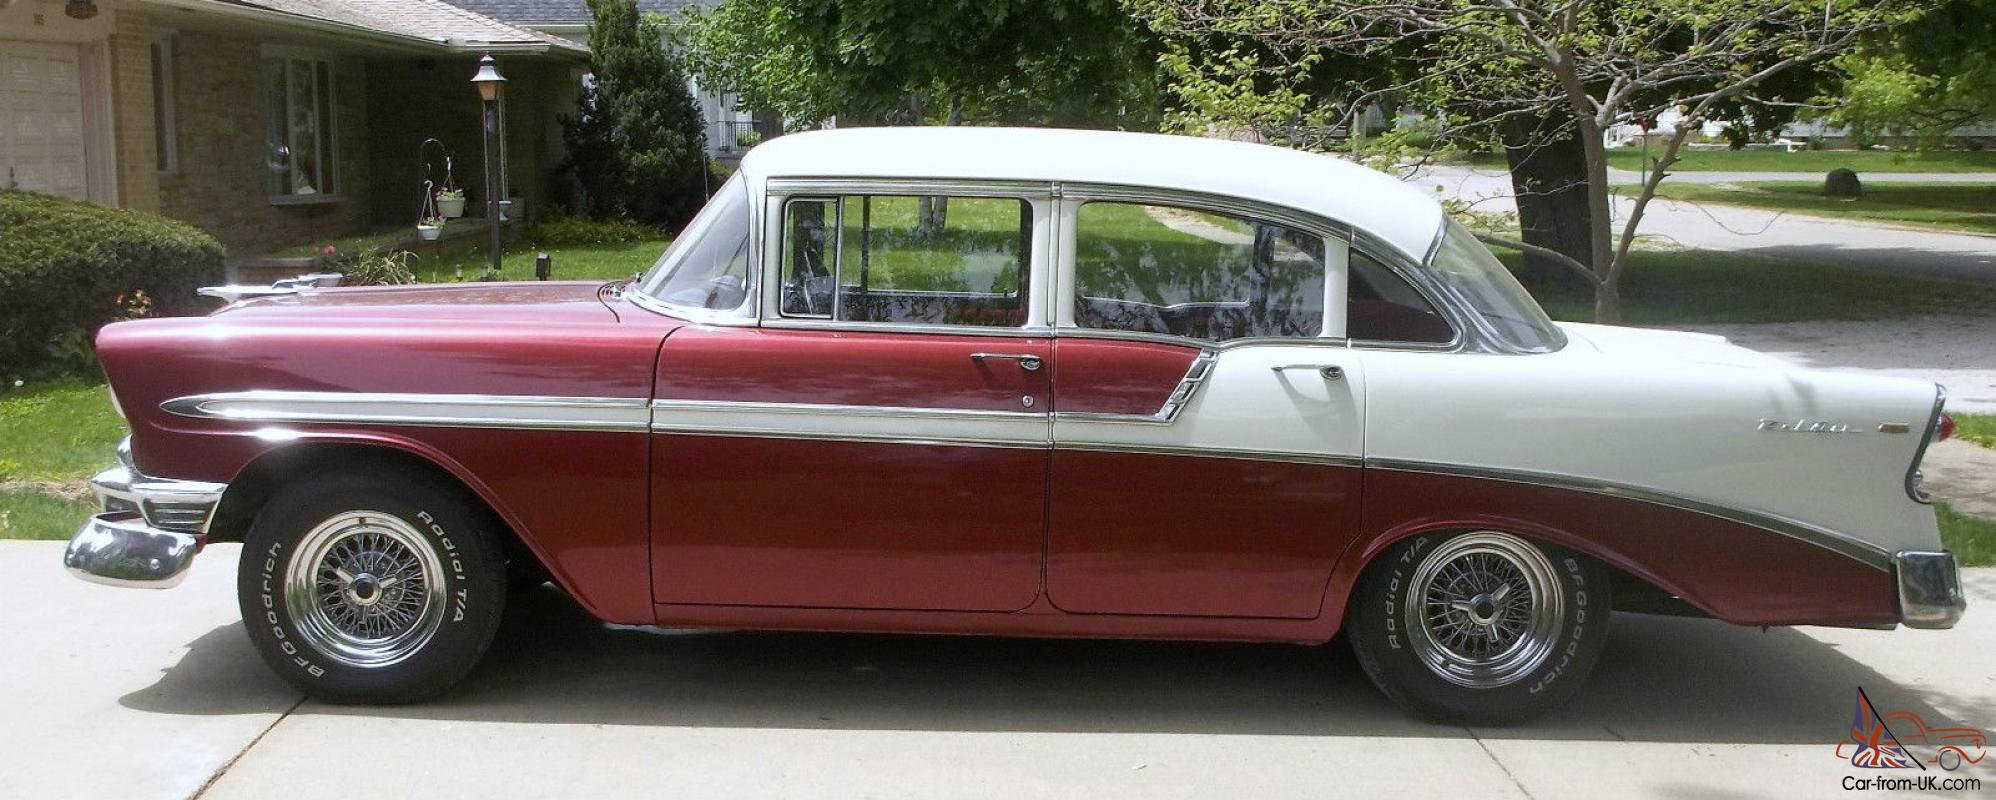 1956 Chevrolet Belair 4 Door 350 Engine W Turbo Transmission New Interior Paint